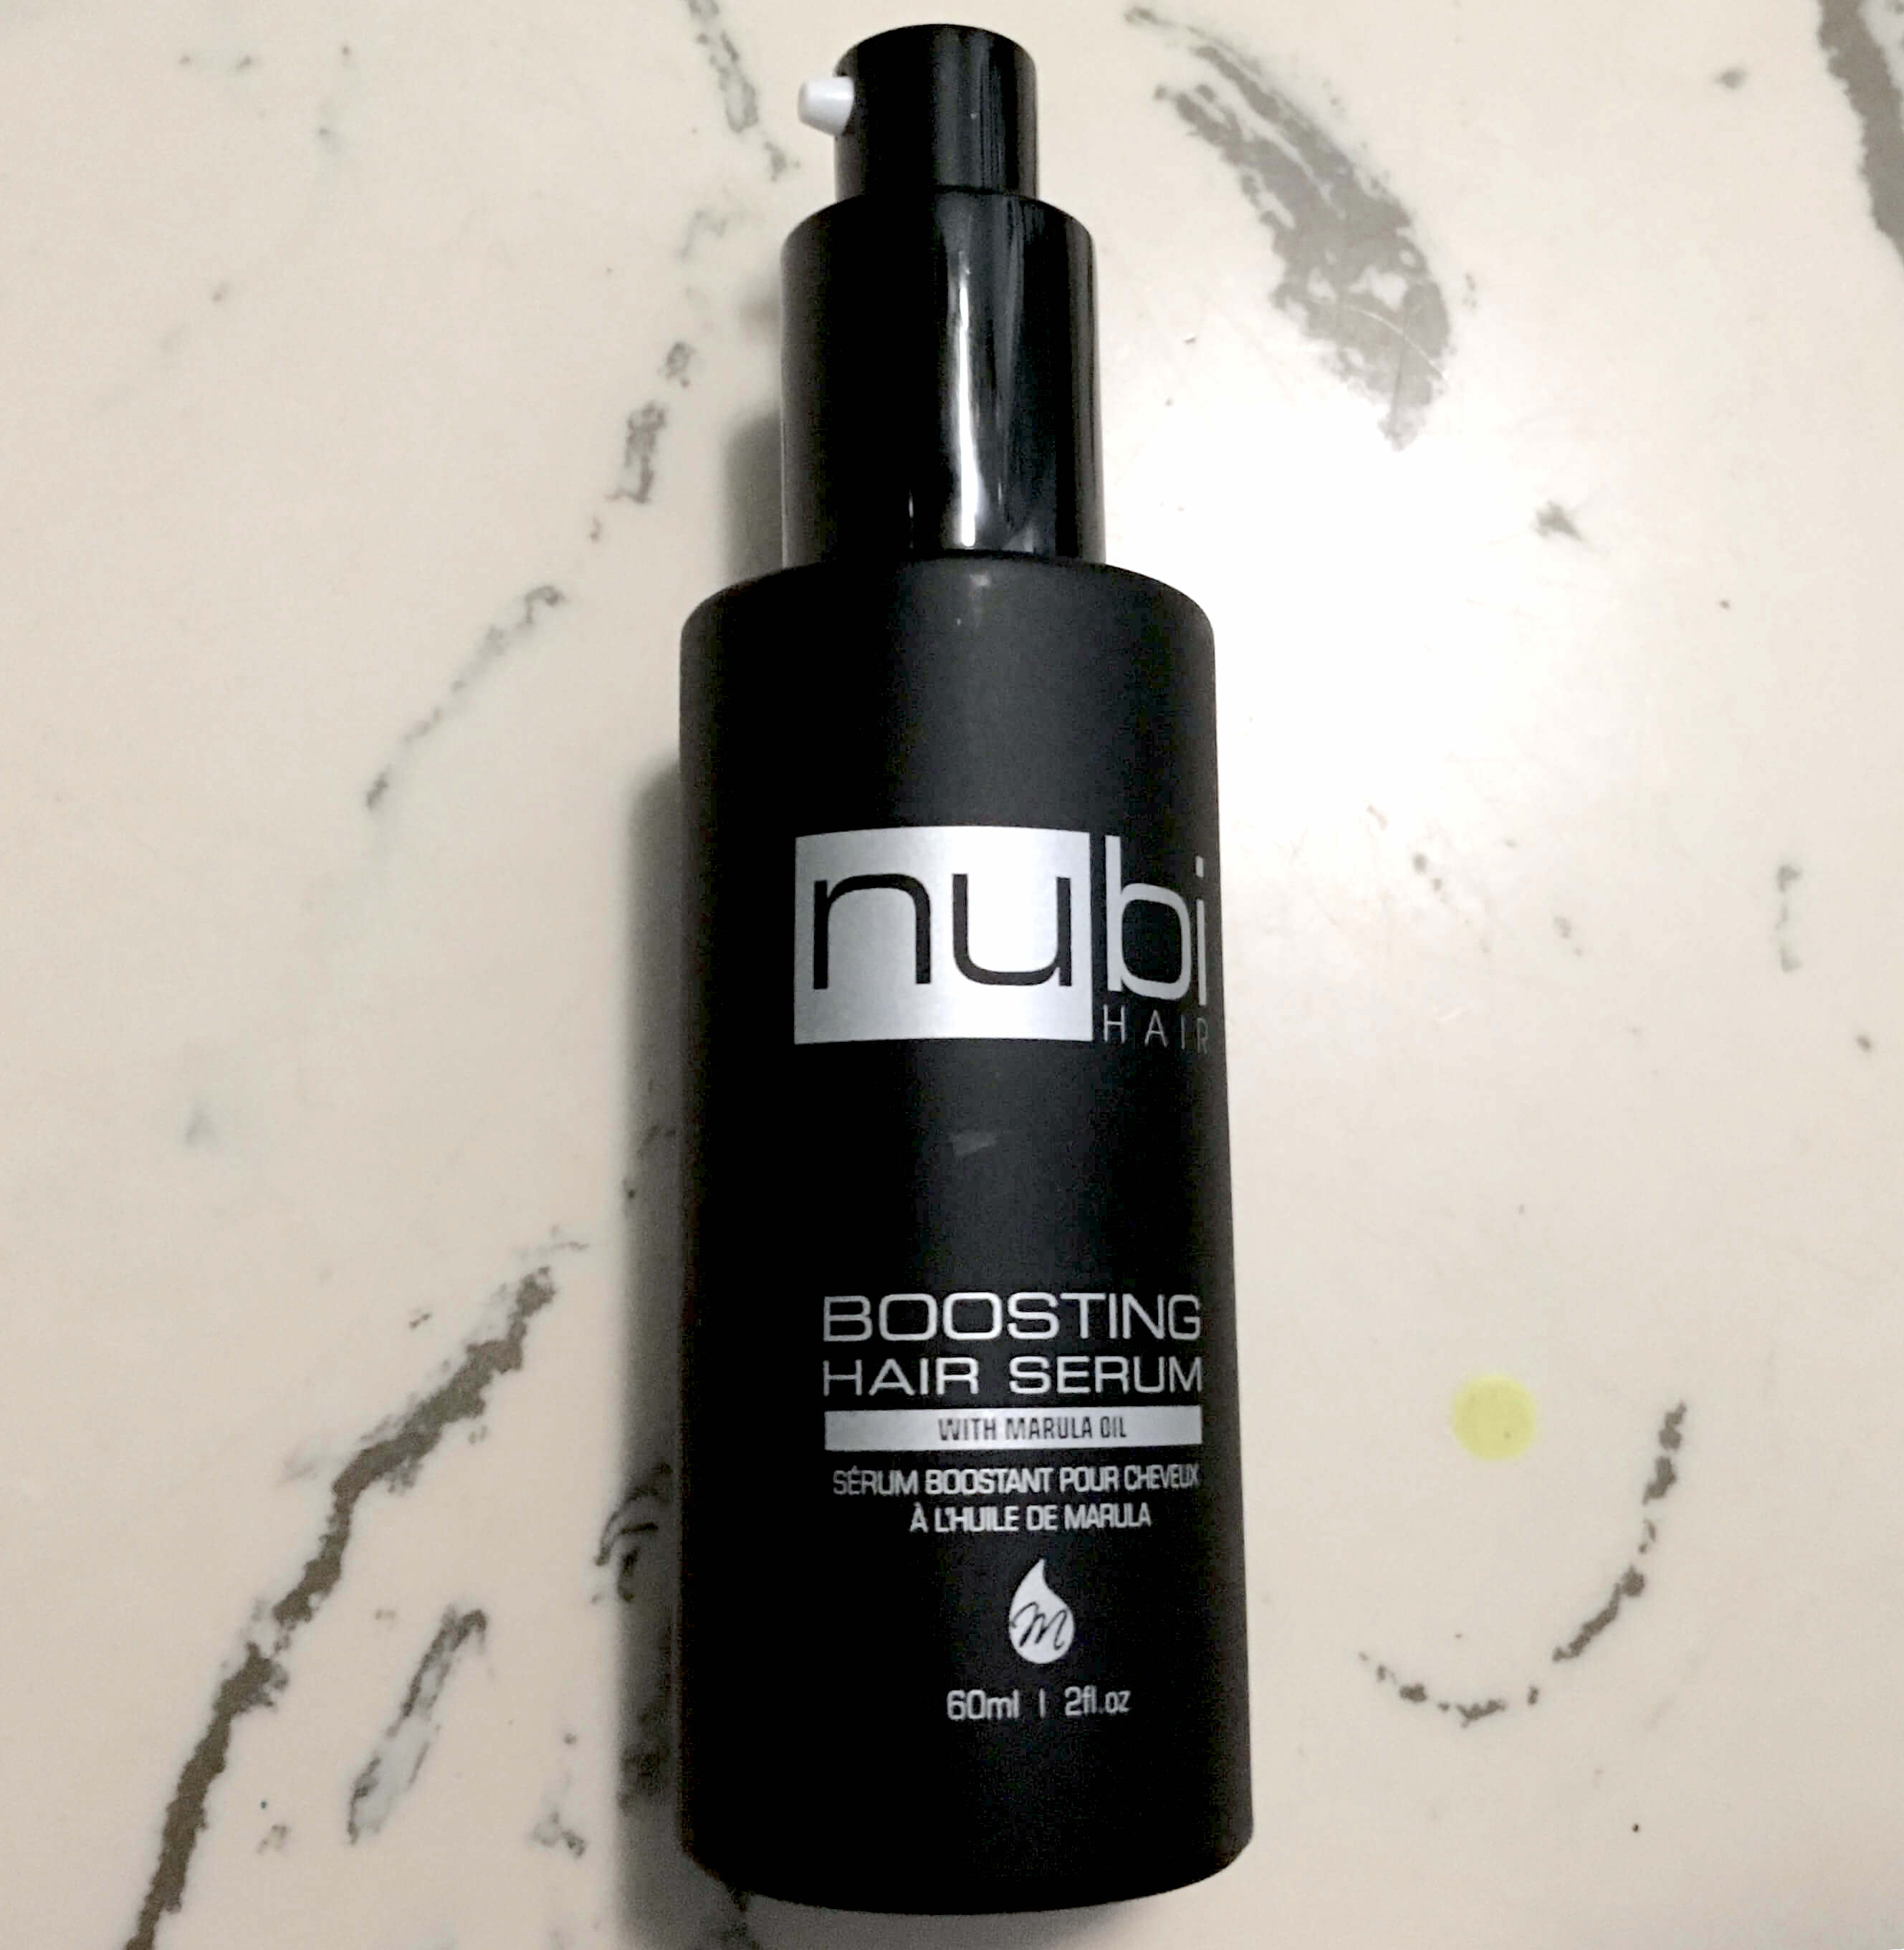 Nubi Boosting Hair Serum with Marula Oil review